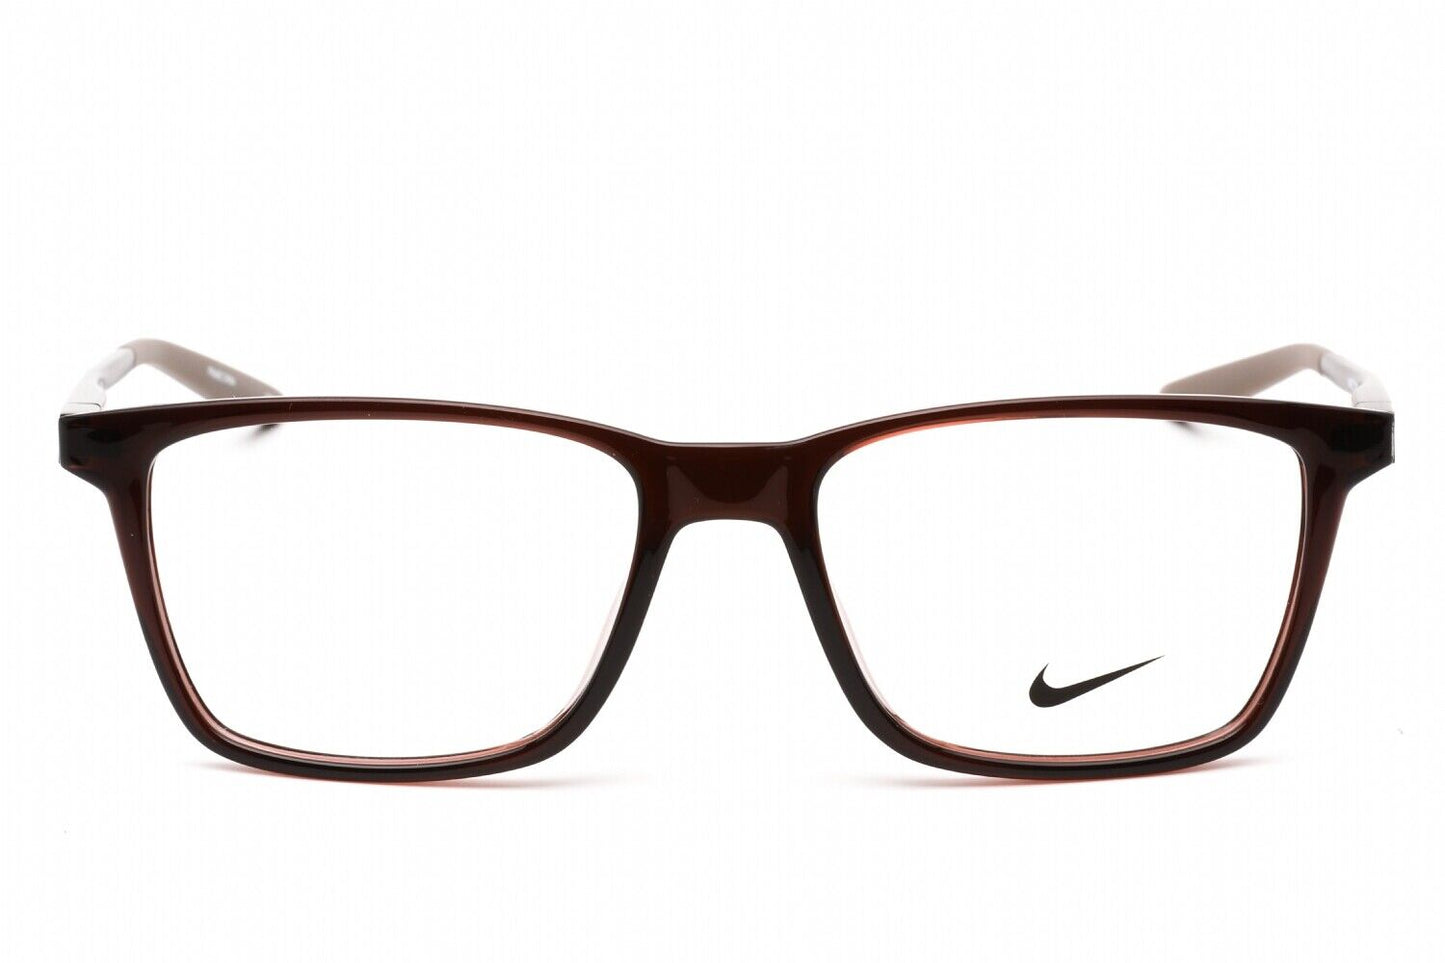 Nike 7286-201-5417 54mm New Eyeglasses